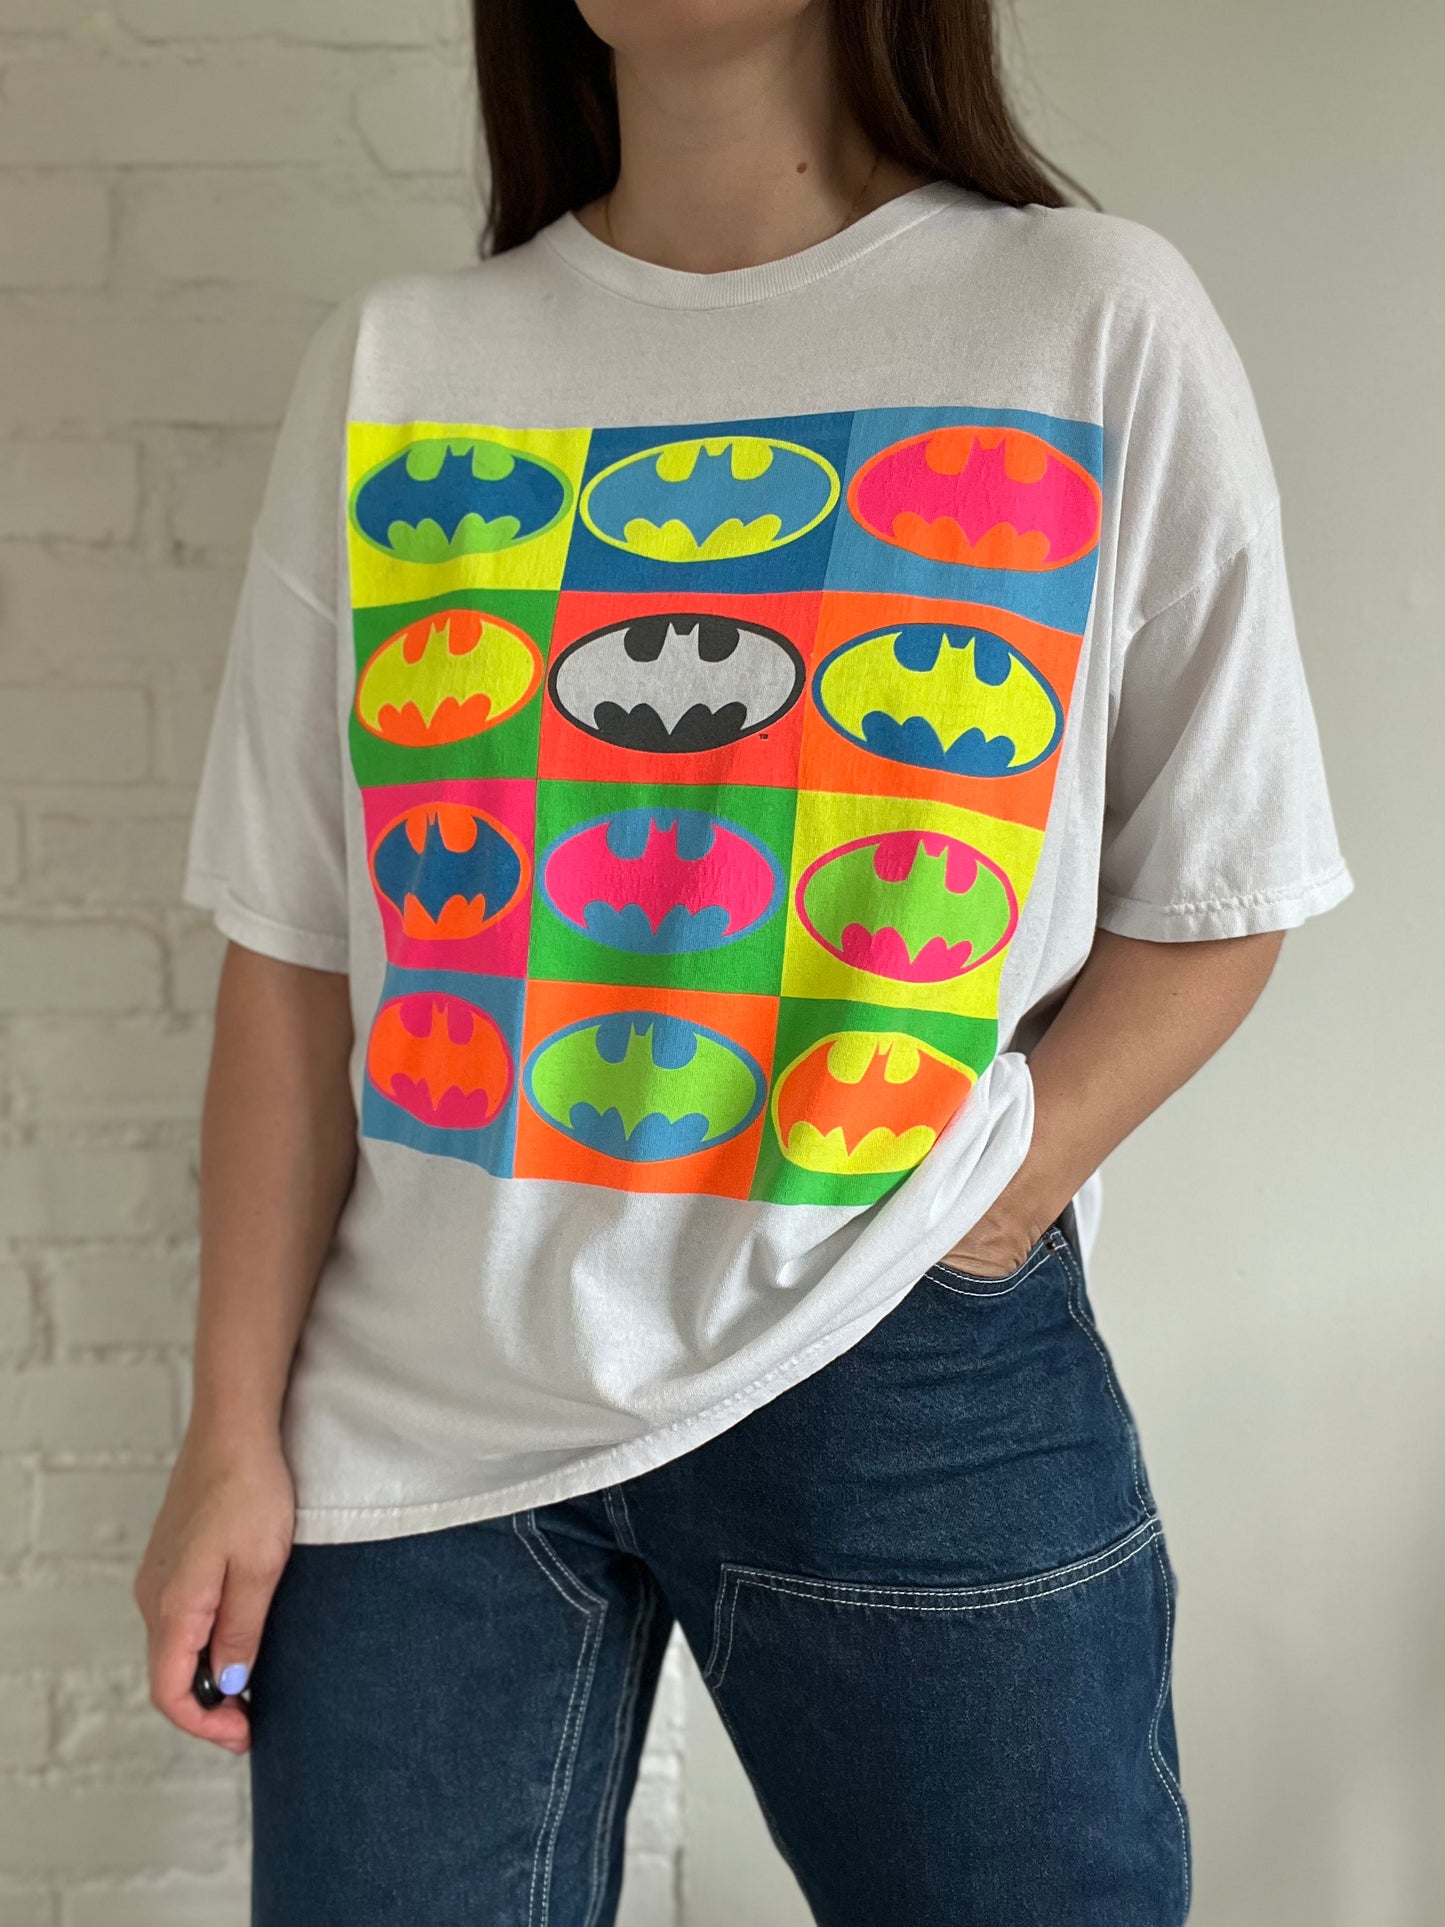 Andy Warhol Batman Vintage T-shirt - XL